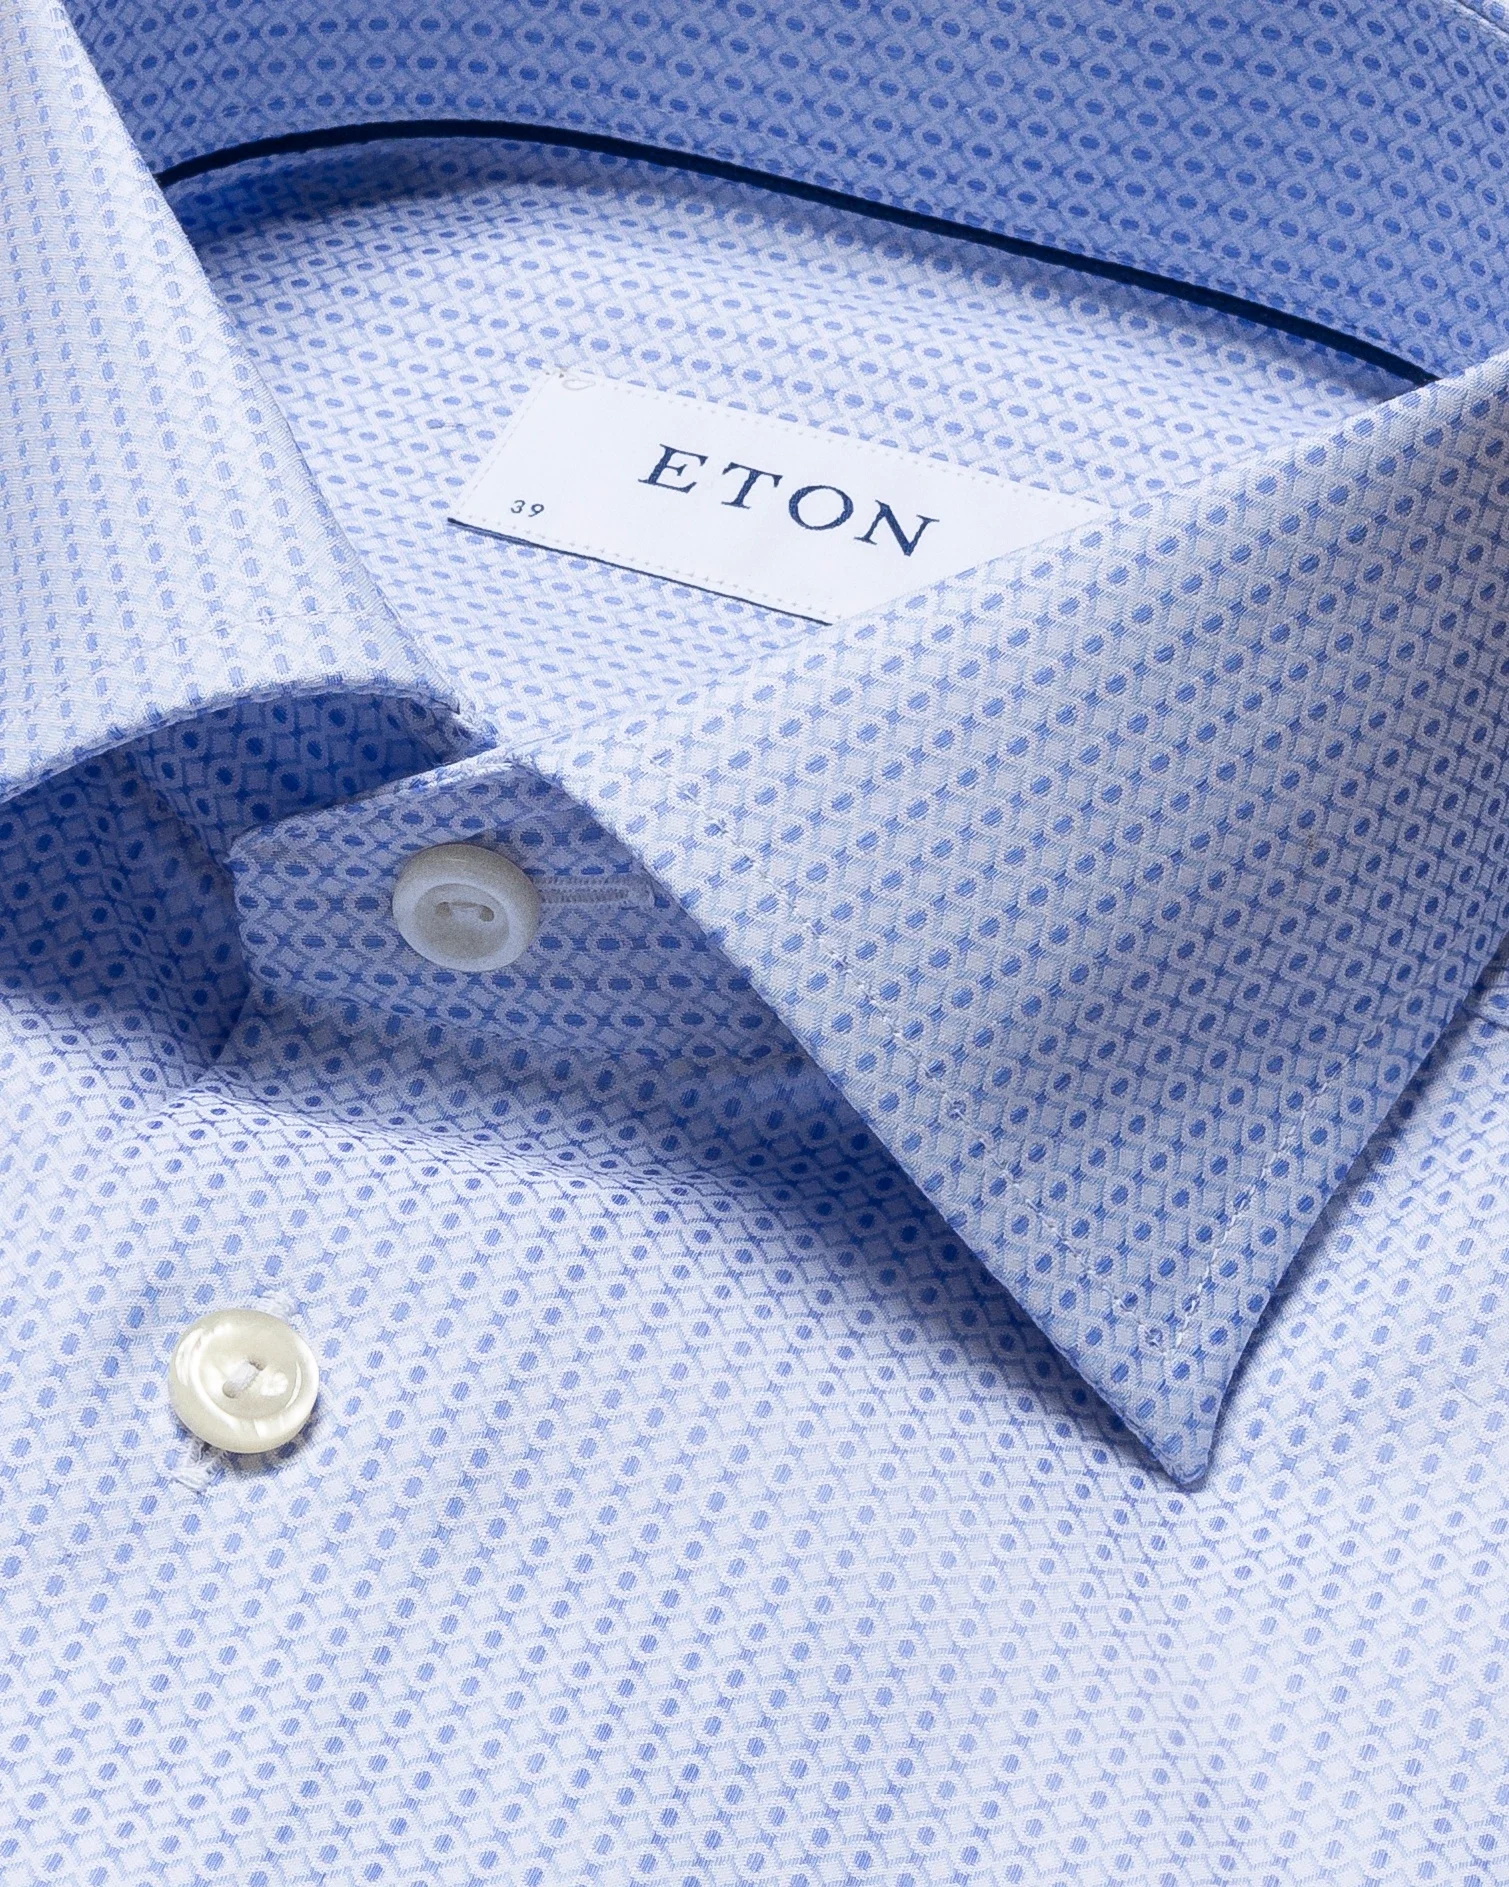 Eton - blue brocade shirt